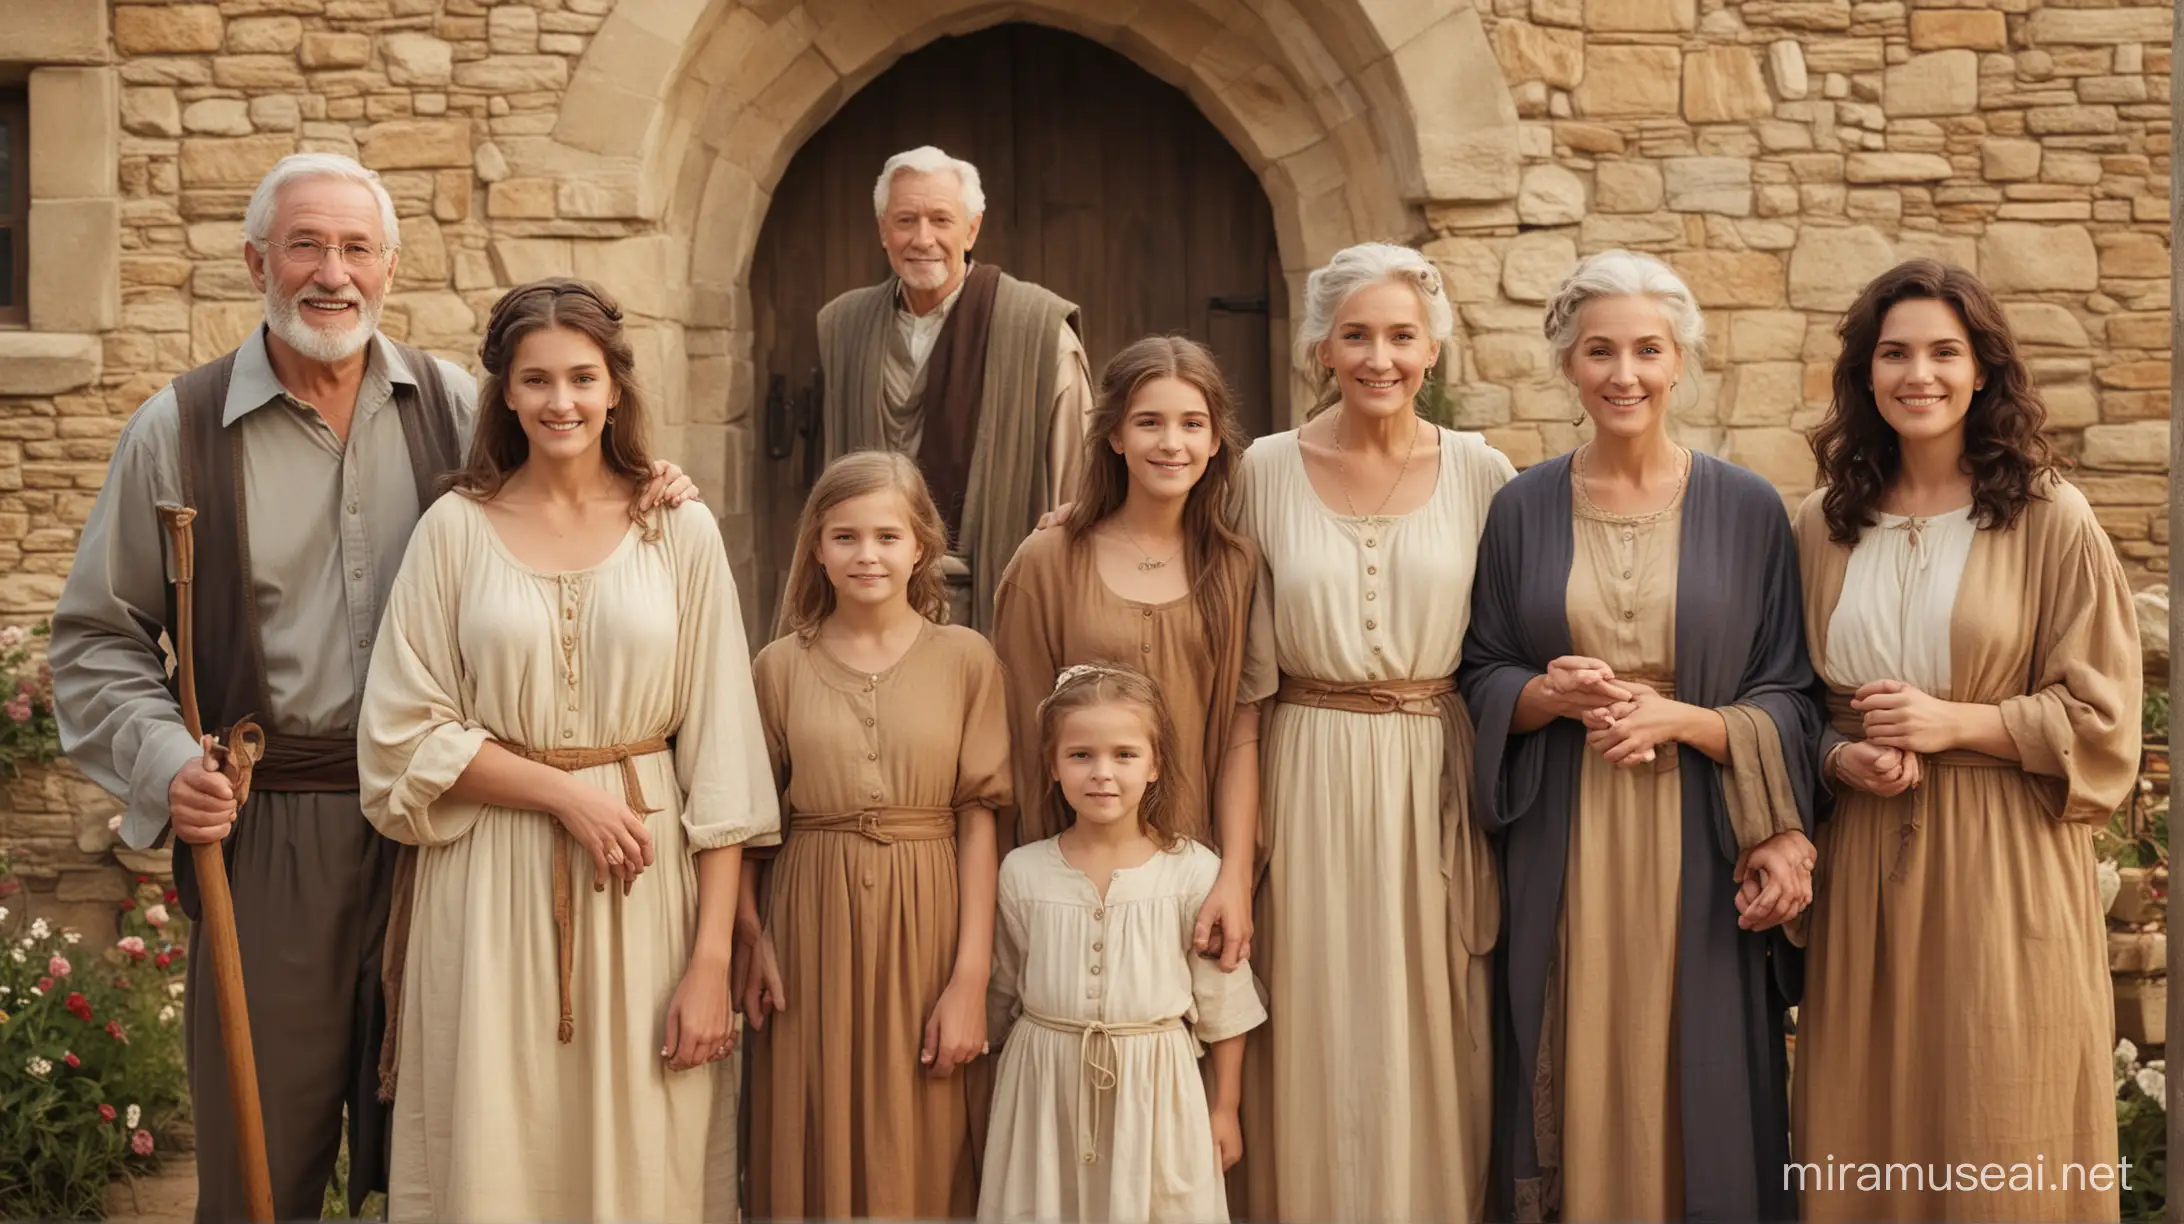 Multigenerational Family Gathering in Biblical Setting